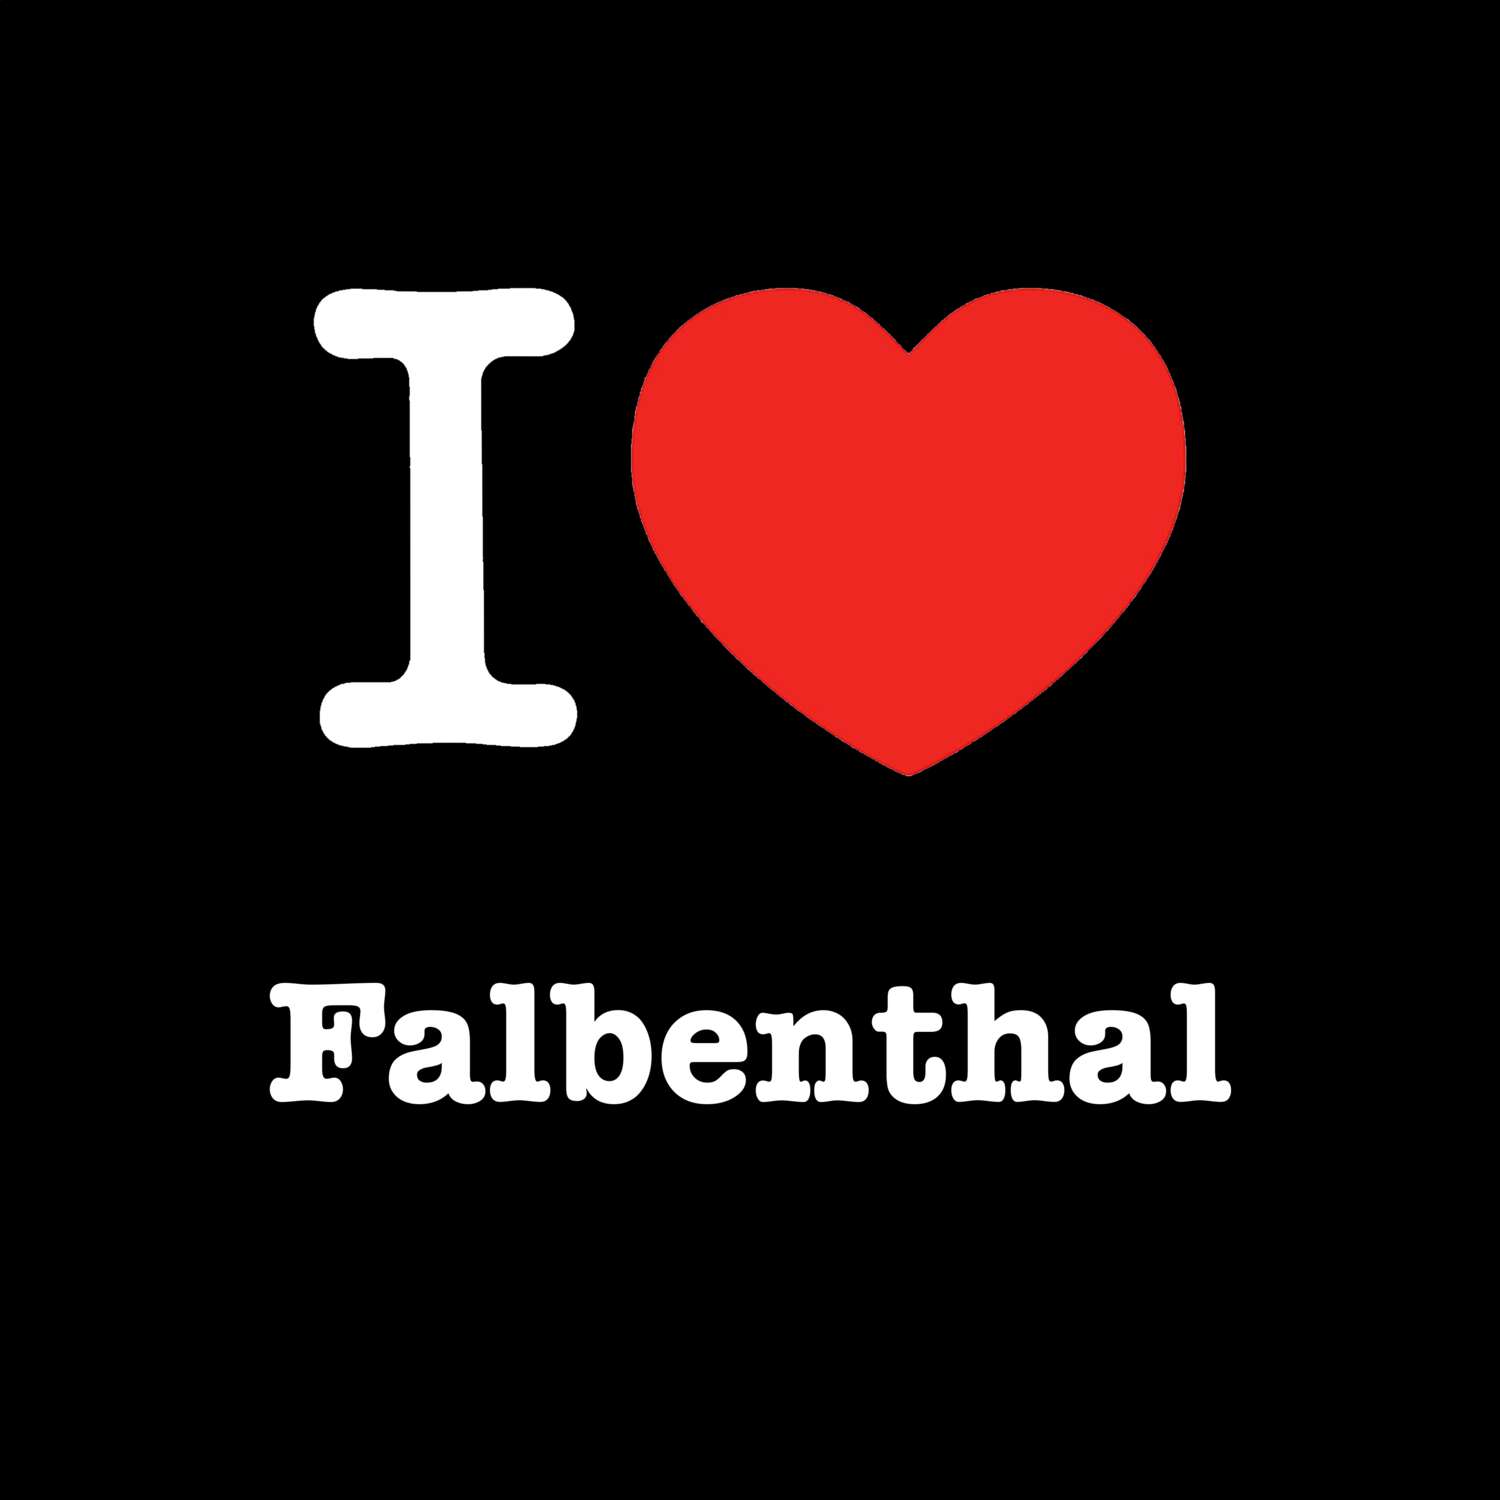 Falbenthal T-Shirt »I love«